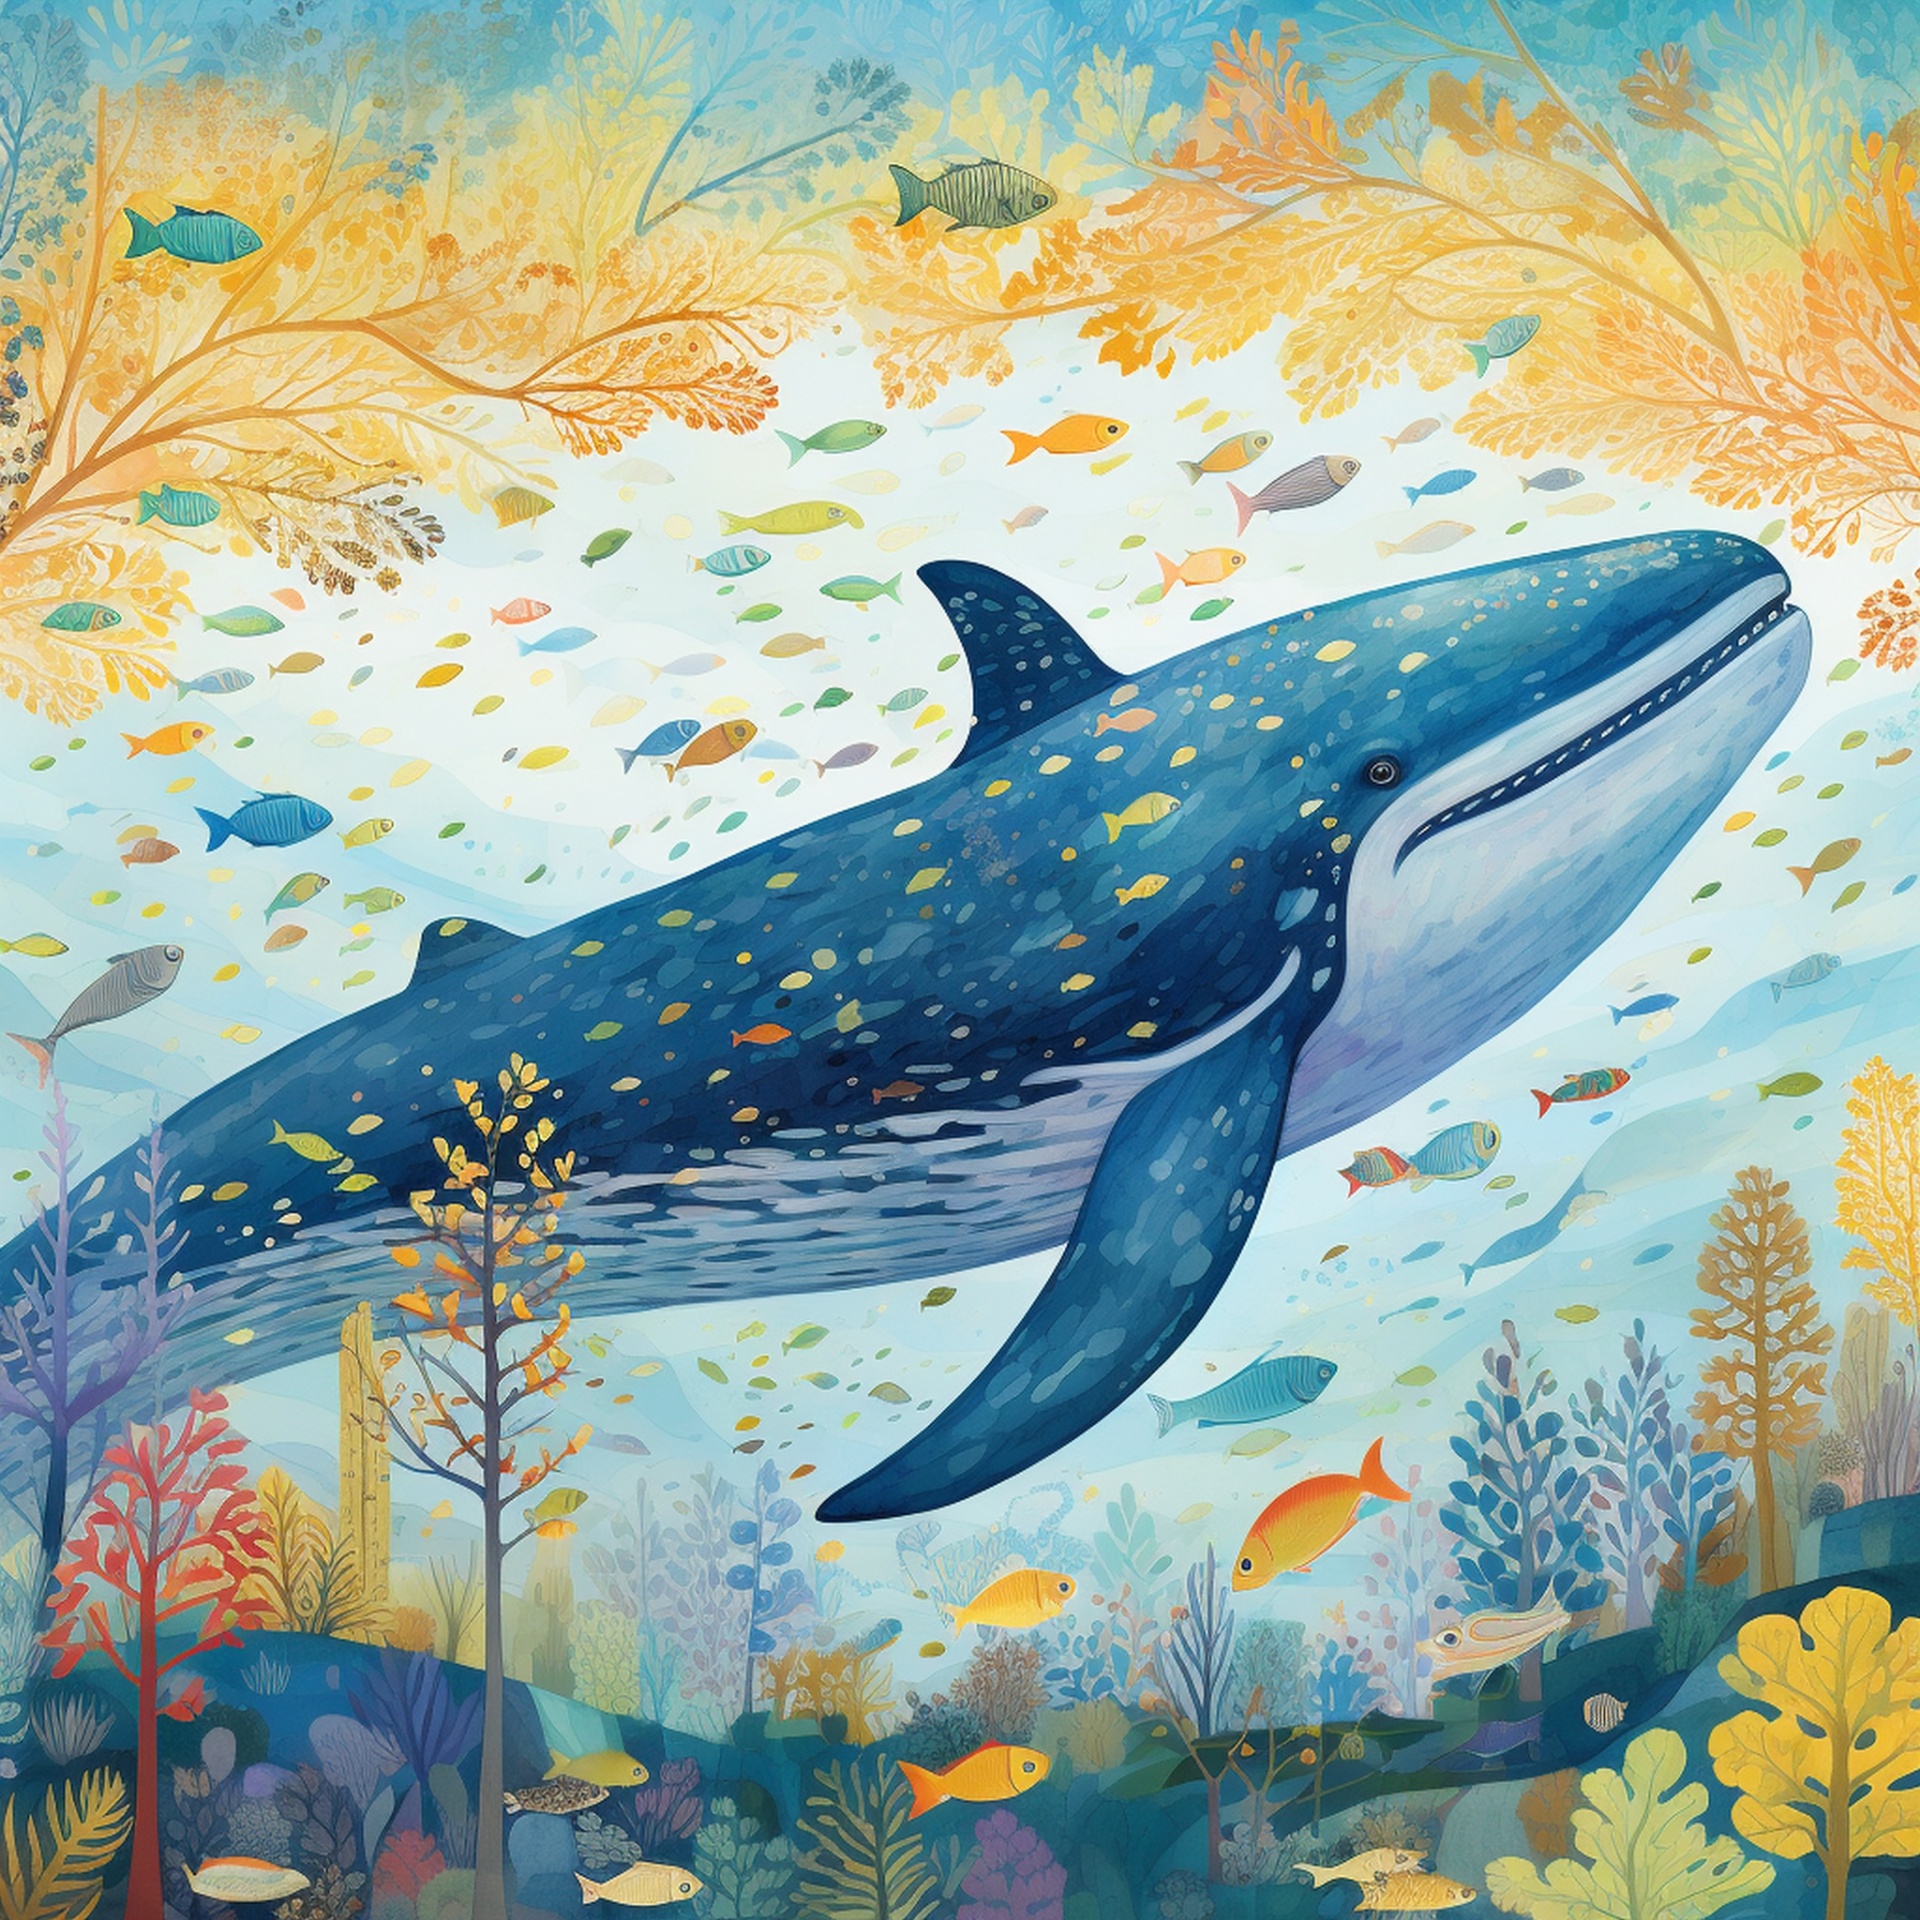 Whale Digital Art Illustration Free Stock Photo - Public Domain Pictures